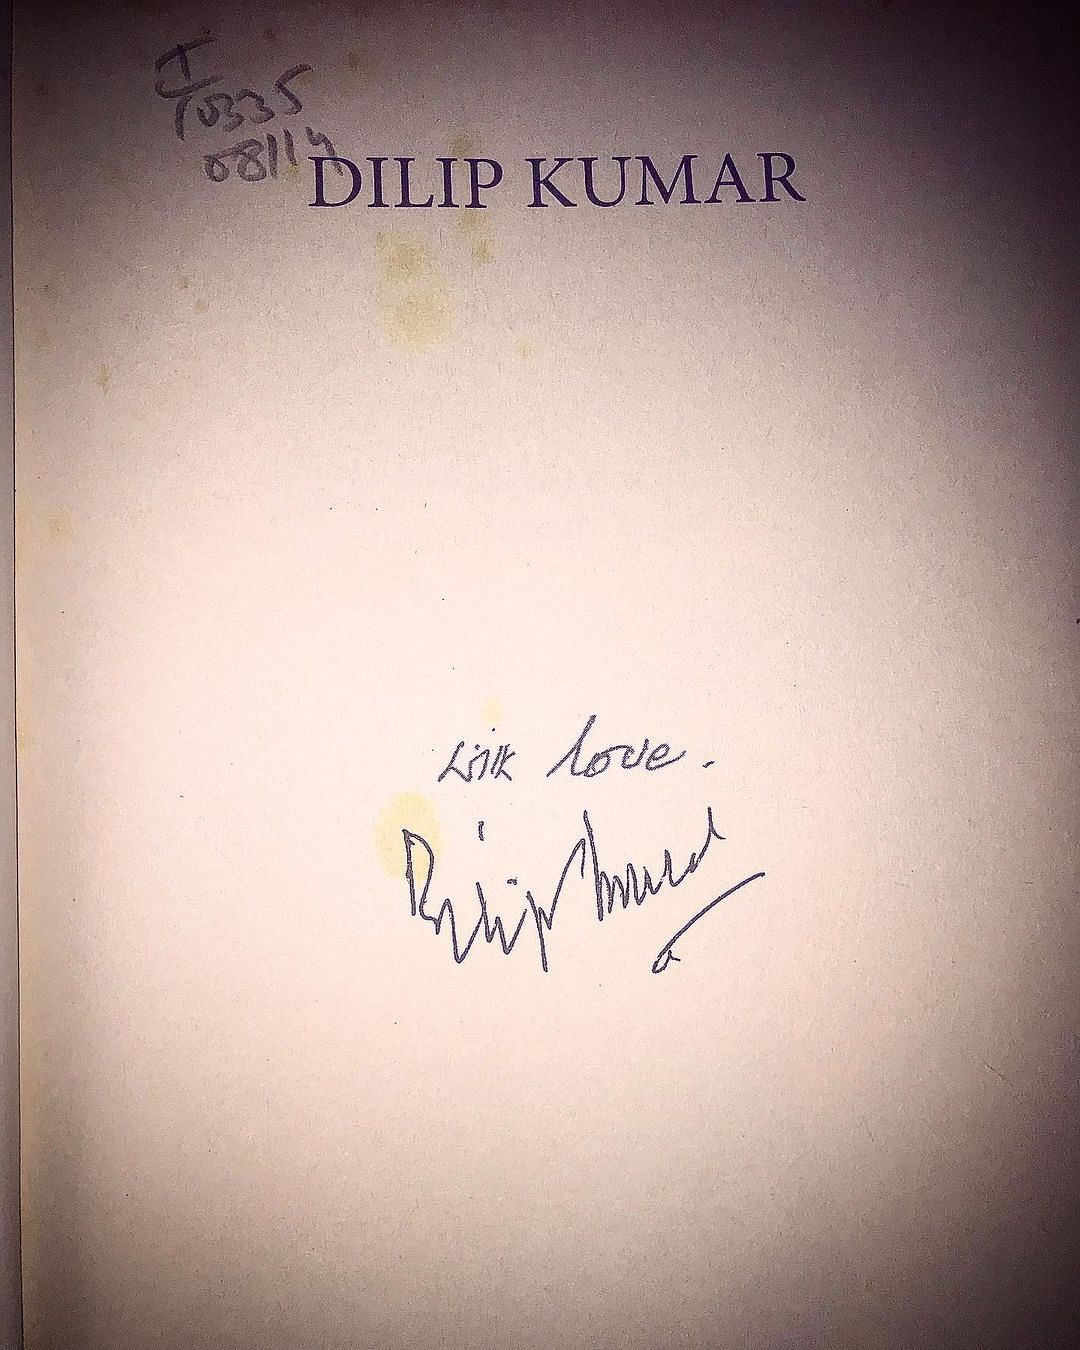 Read about Irrfan Khan's son Babil's emotional tribute to Dilip Kumar.